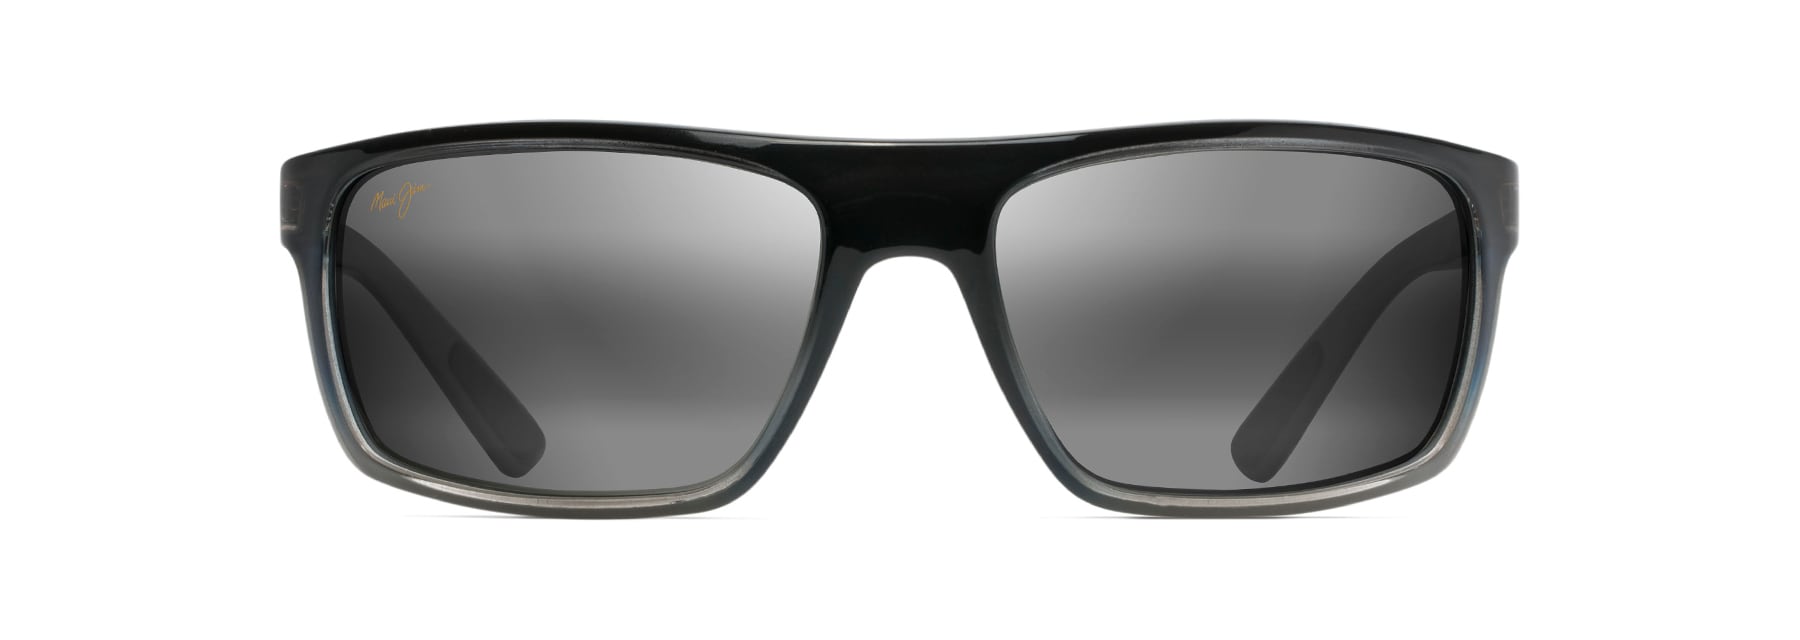 Buy Maui Jim One Way B875-03 Dark Navy Stripe prescription Sunglasses